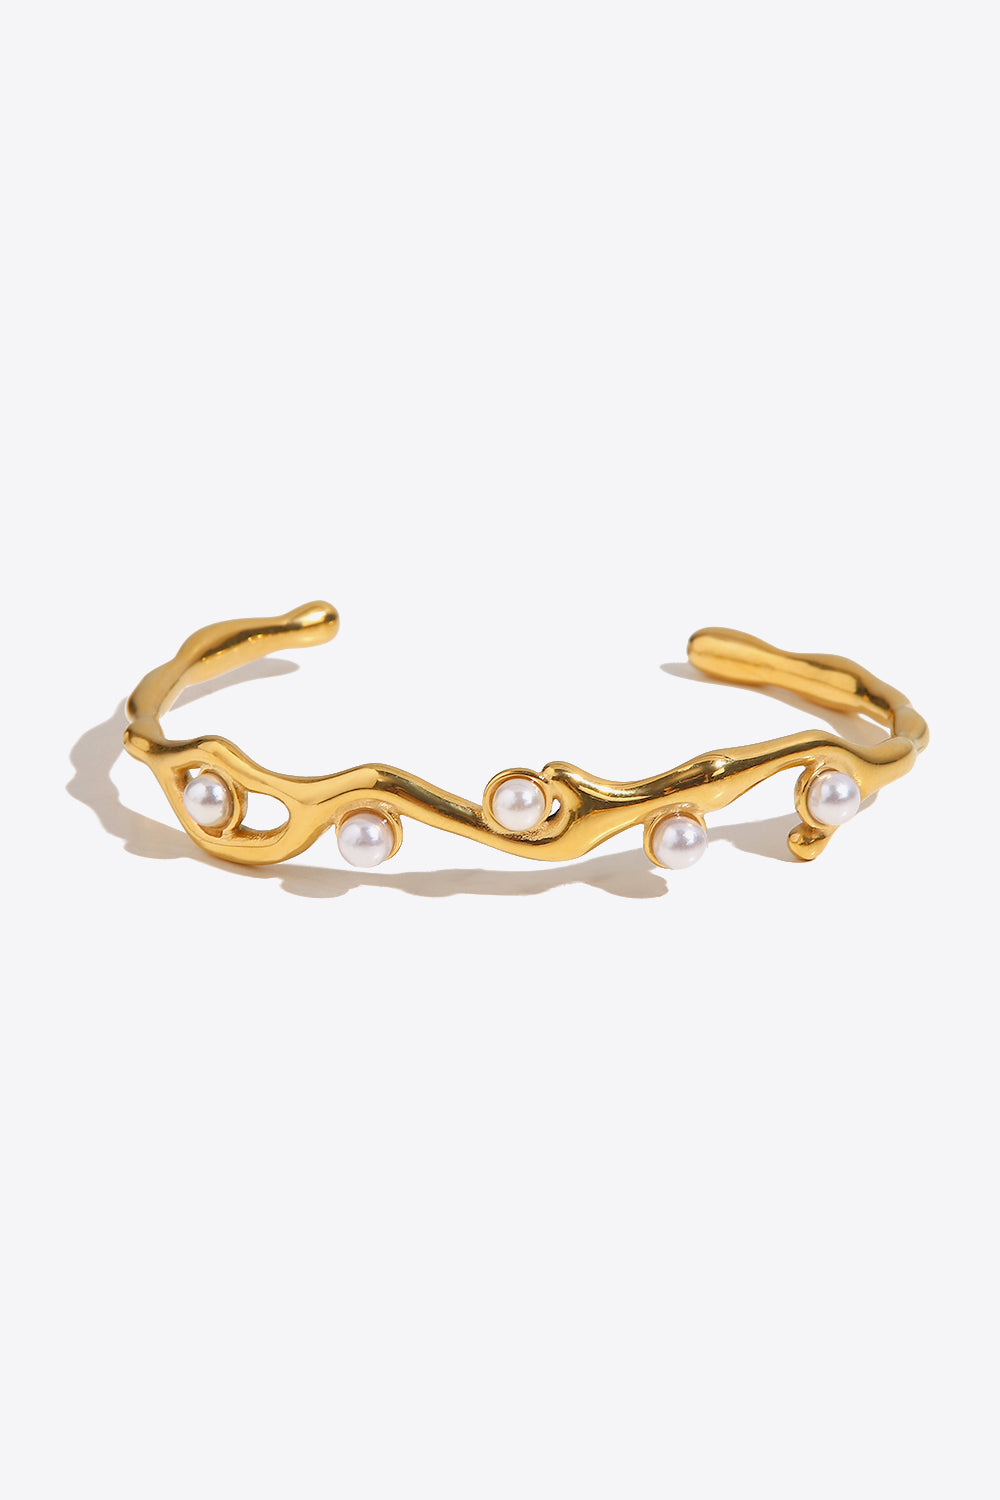 Inlaid Synthetic Pearl Open Bracelet - Gold / One Size - Women’s Jewelry - Bracelets - 1 - 2024